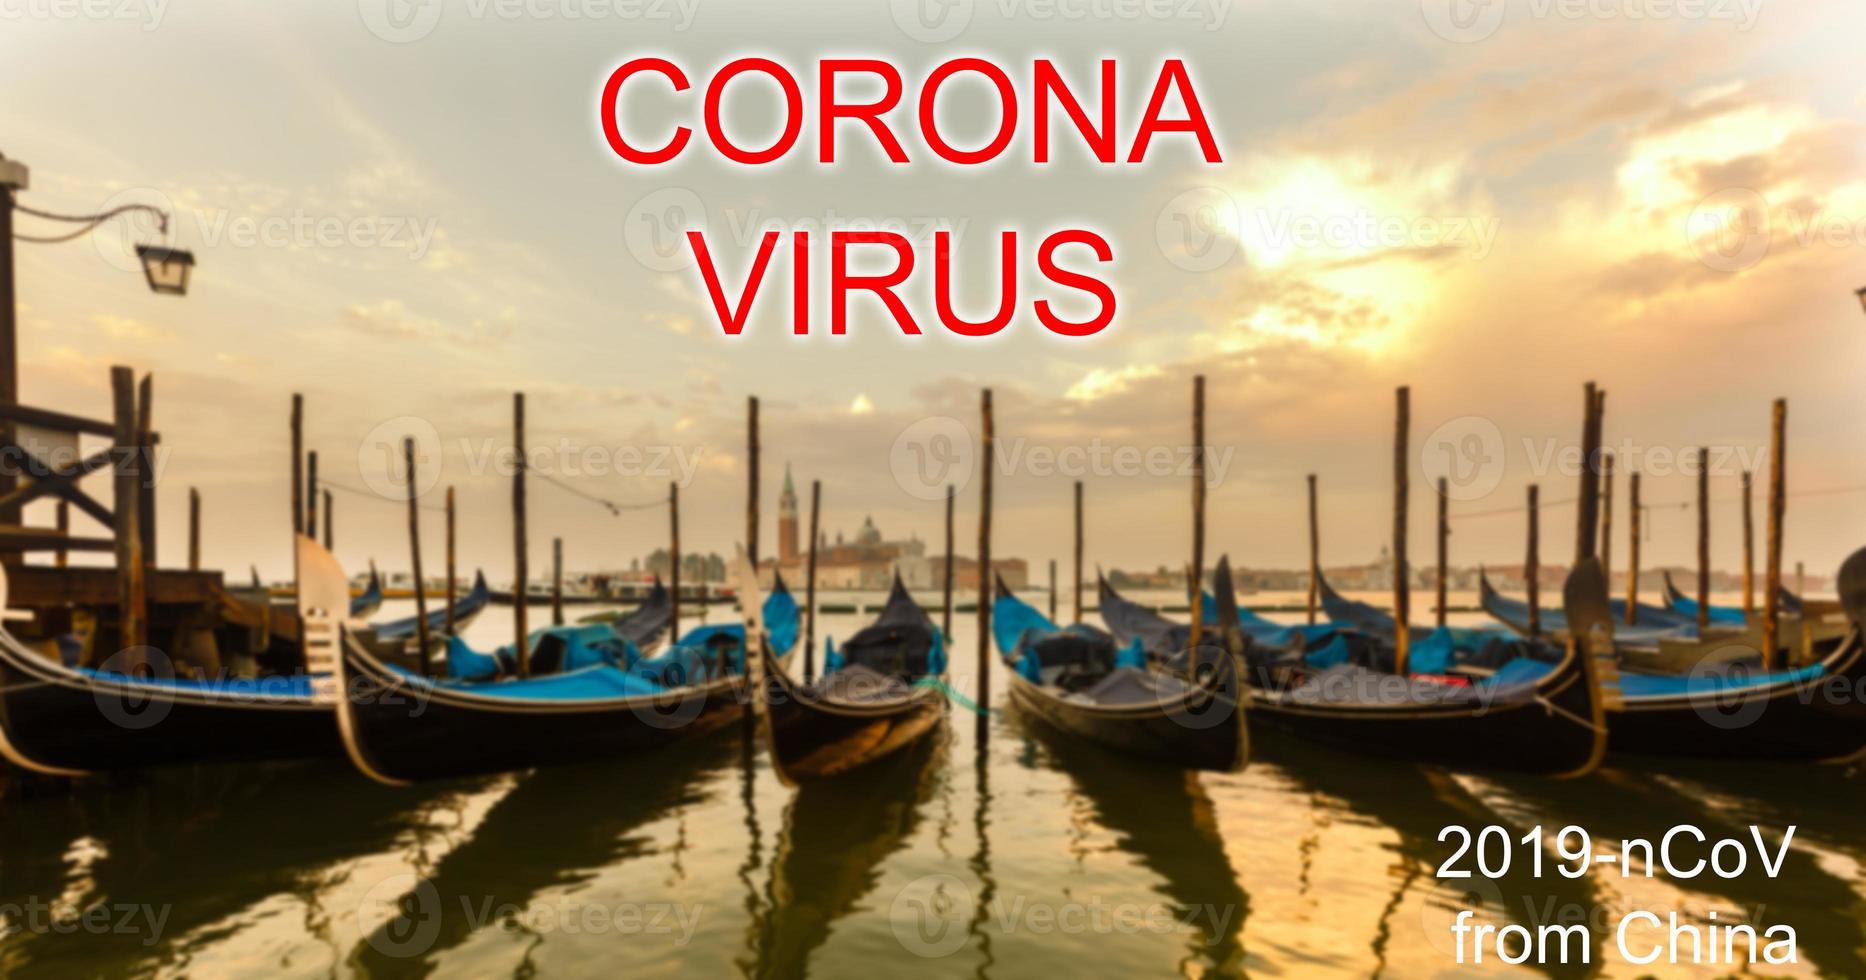 Coronavirus 2019-nCoV, COVID-19 in Italy. Venice gondolas on San Marco square, Venice, Italy. photo